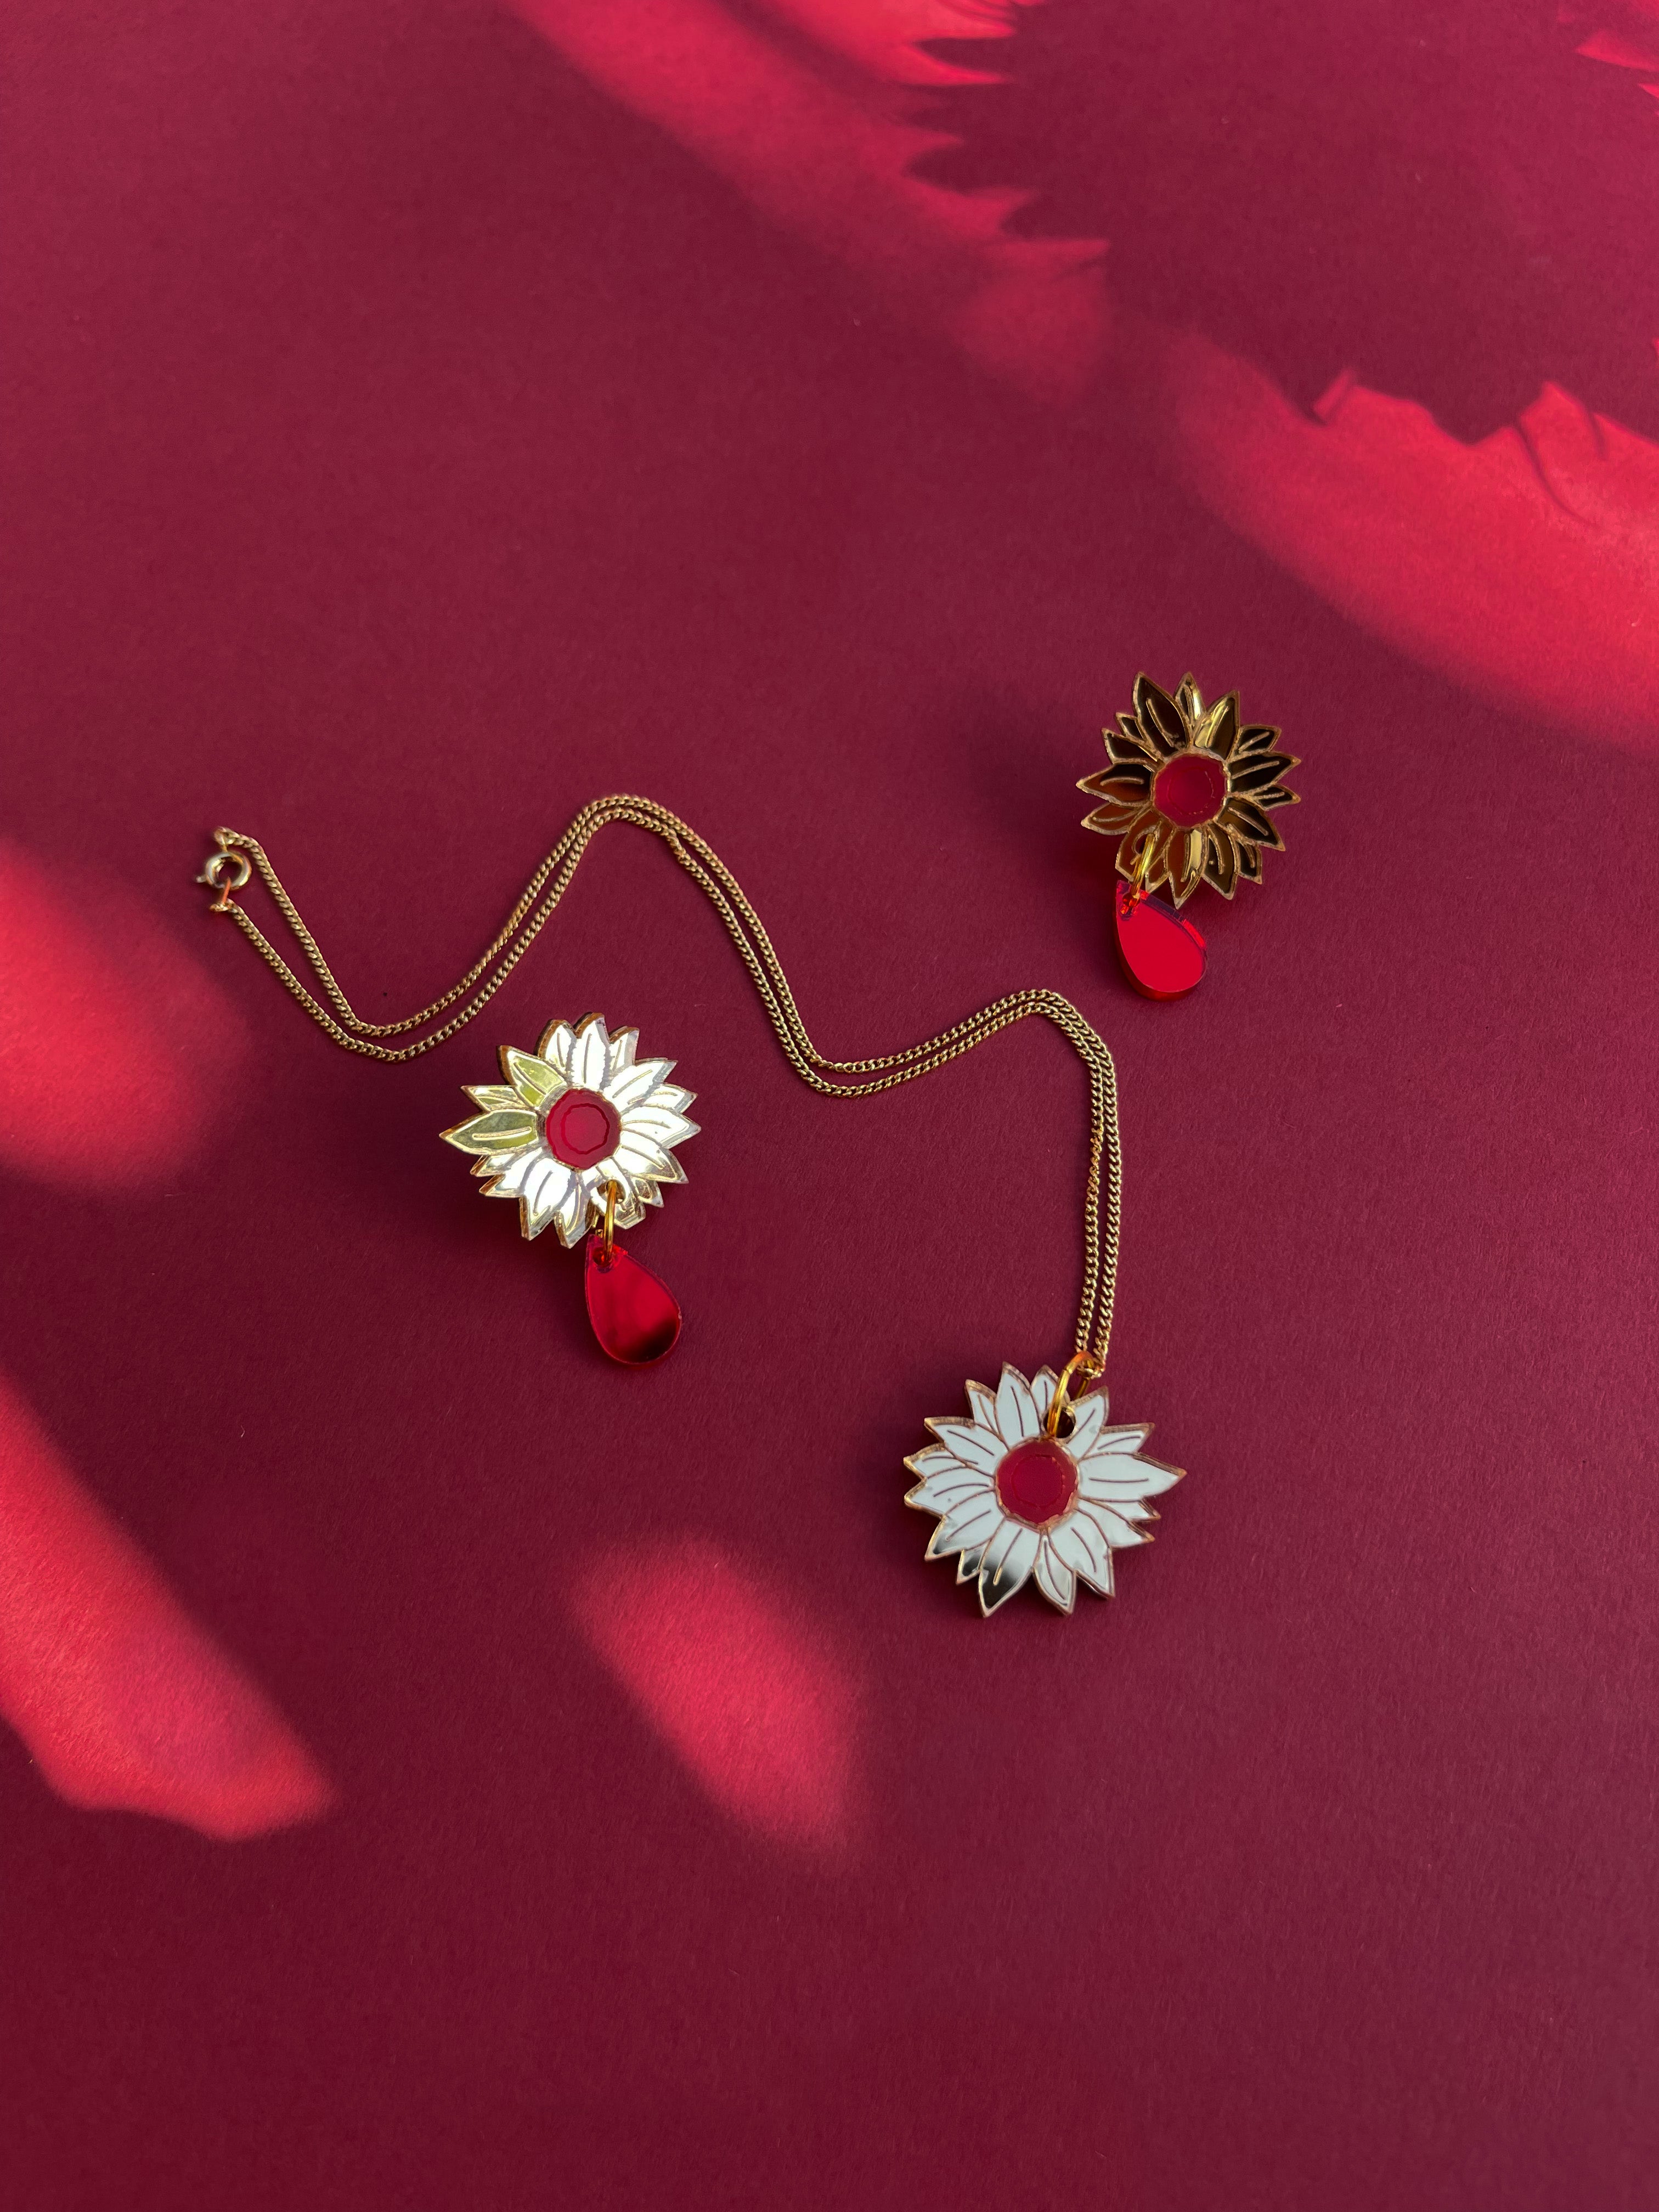 Sunflower Mini Necklace, gold surround